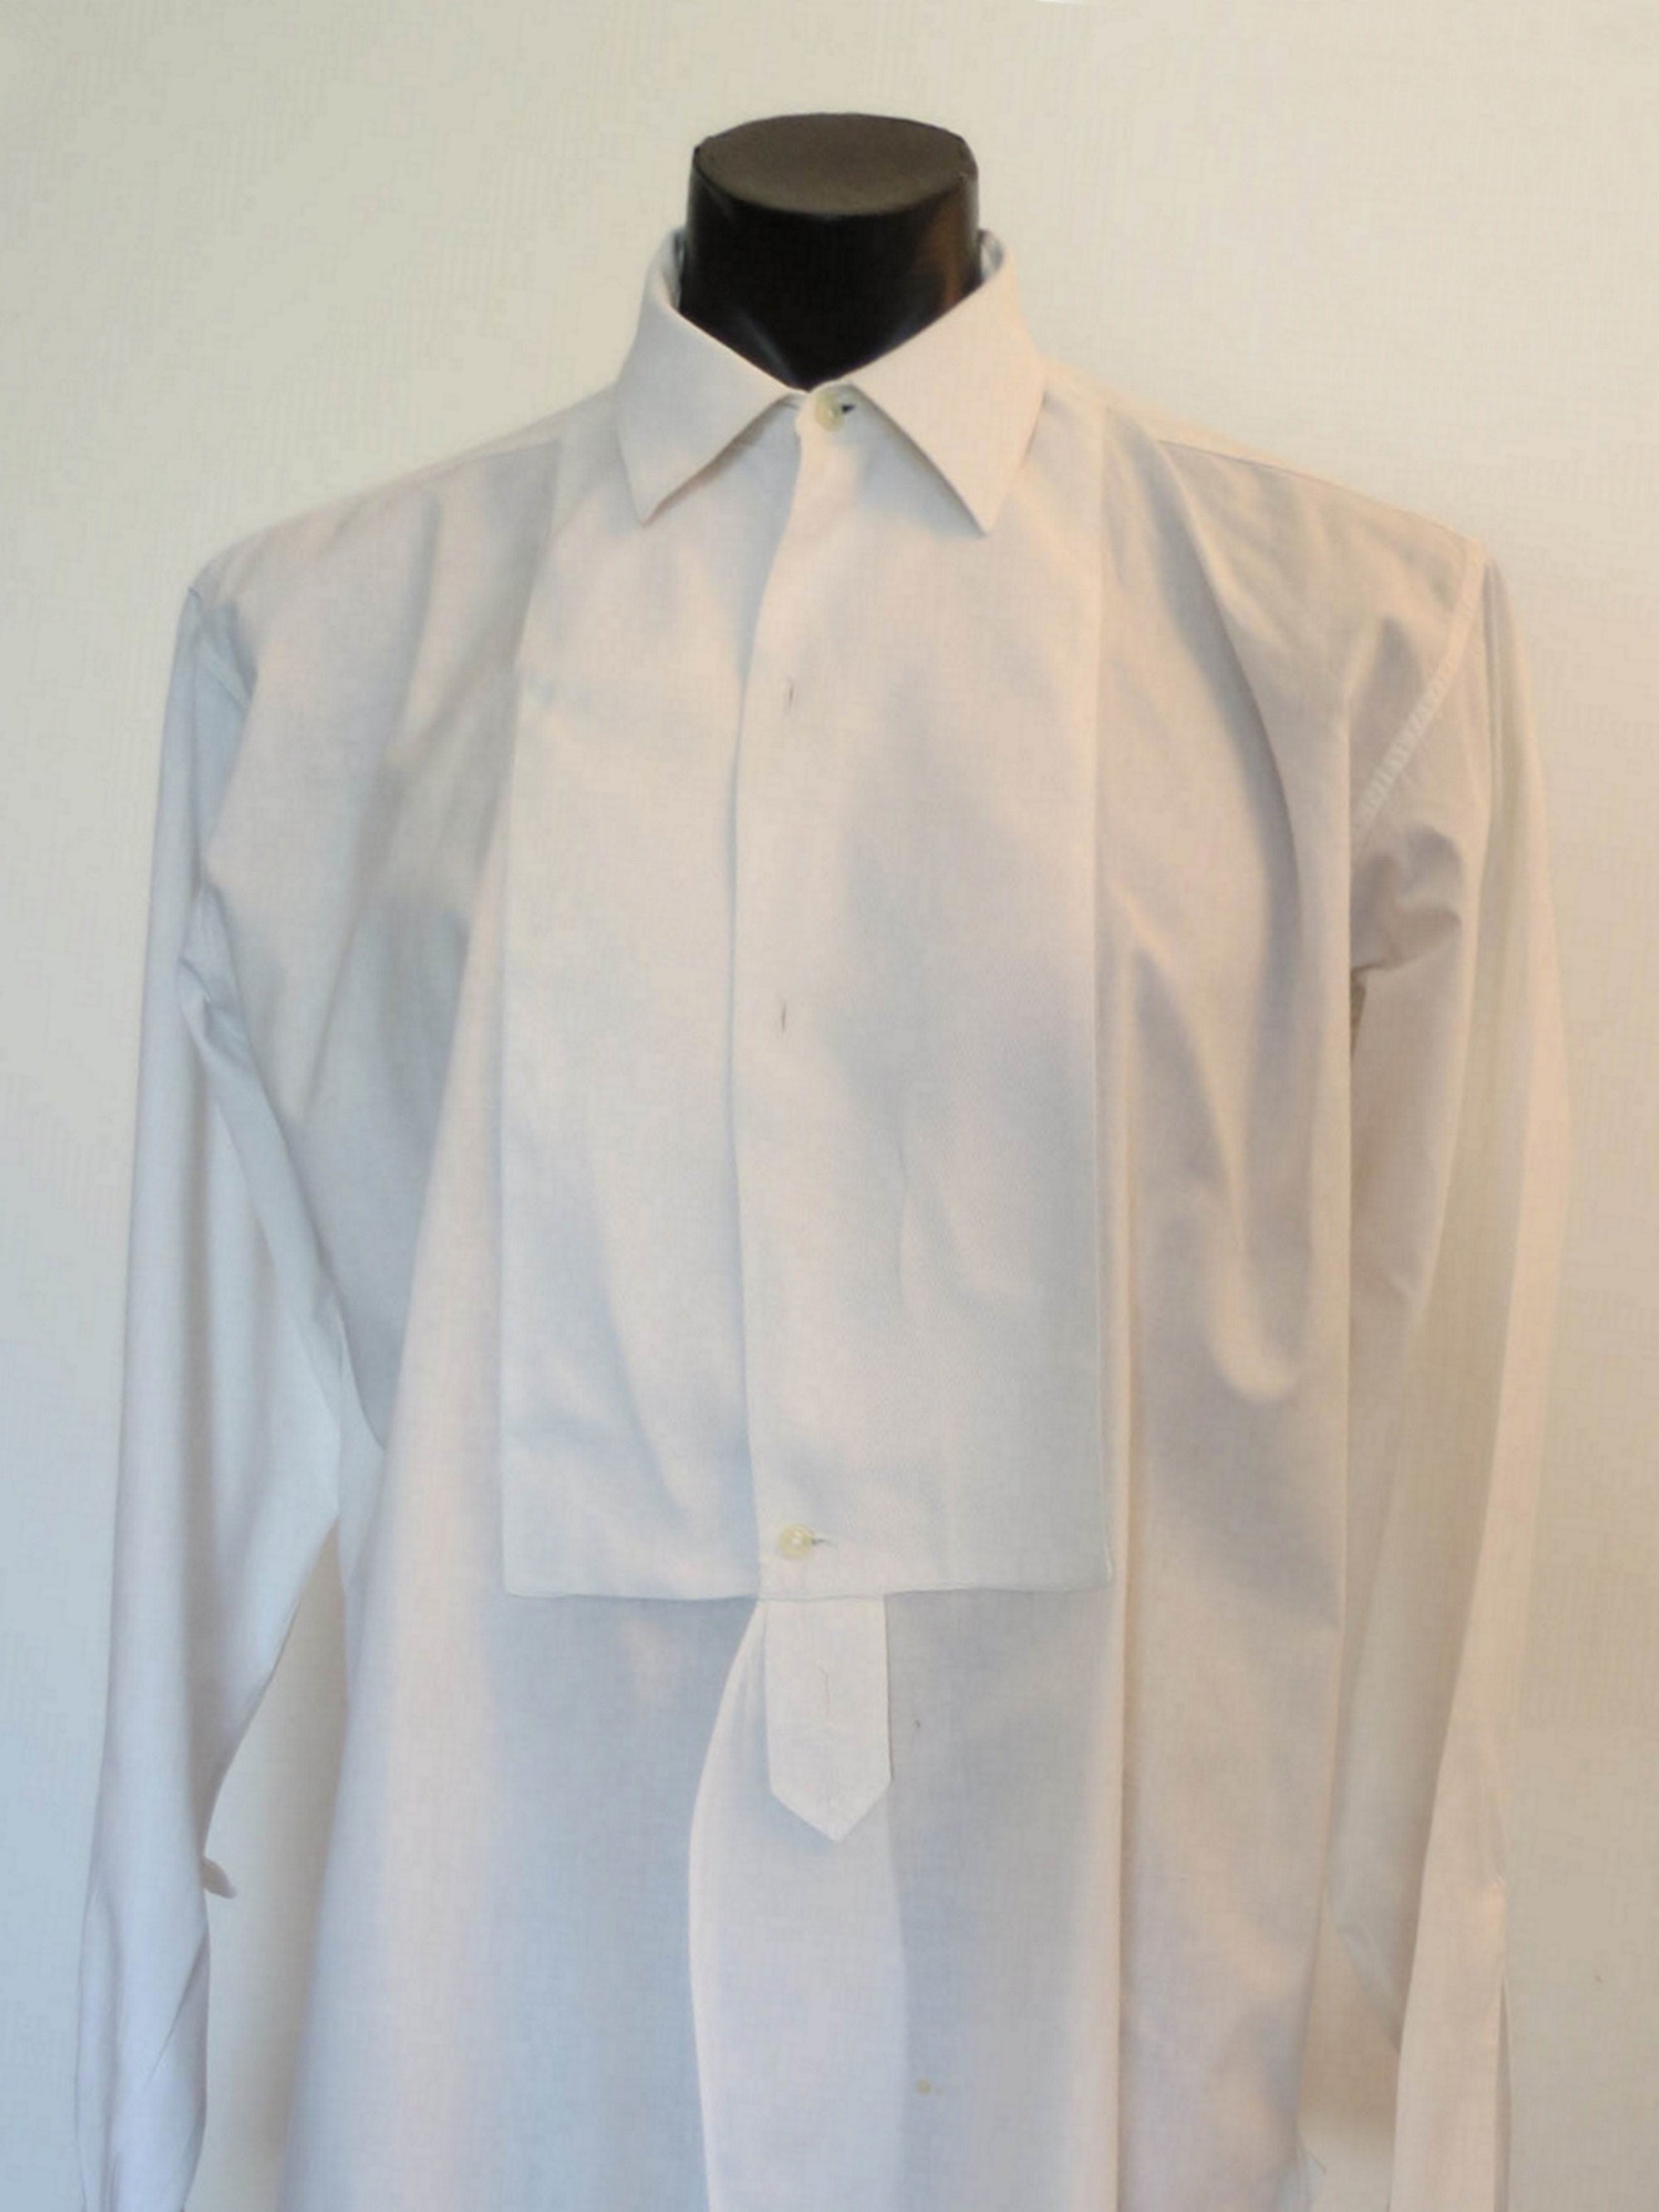 Dress Shirt With Pique Front, Collar & Cuffs by Welmar - 1950s - Neck 42 cm